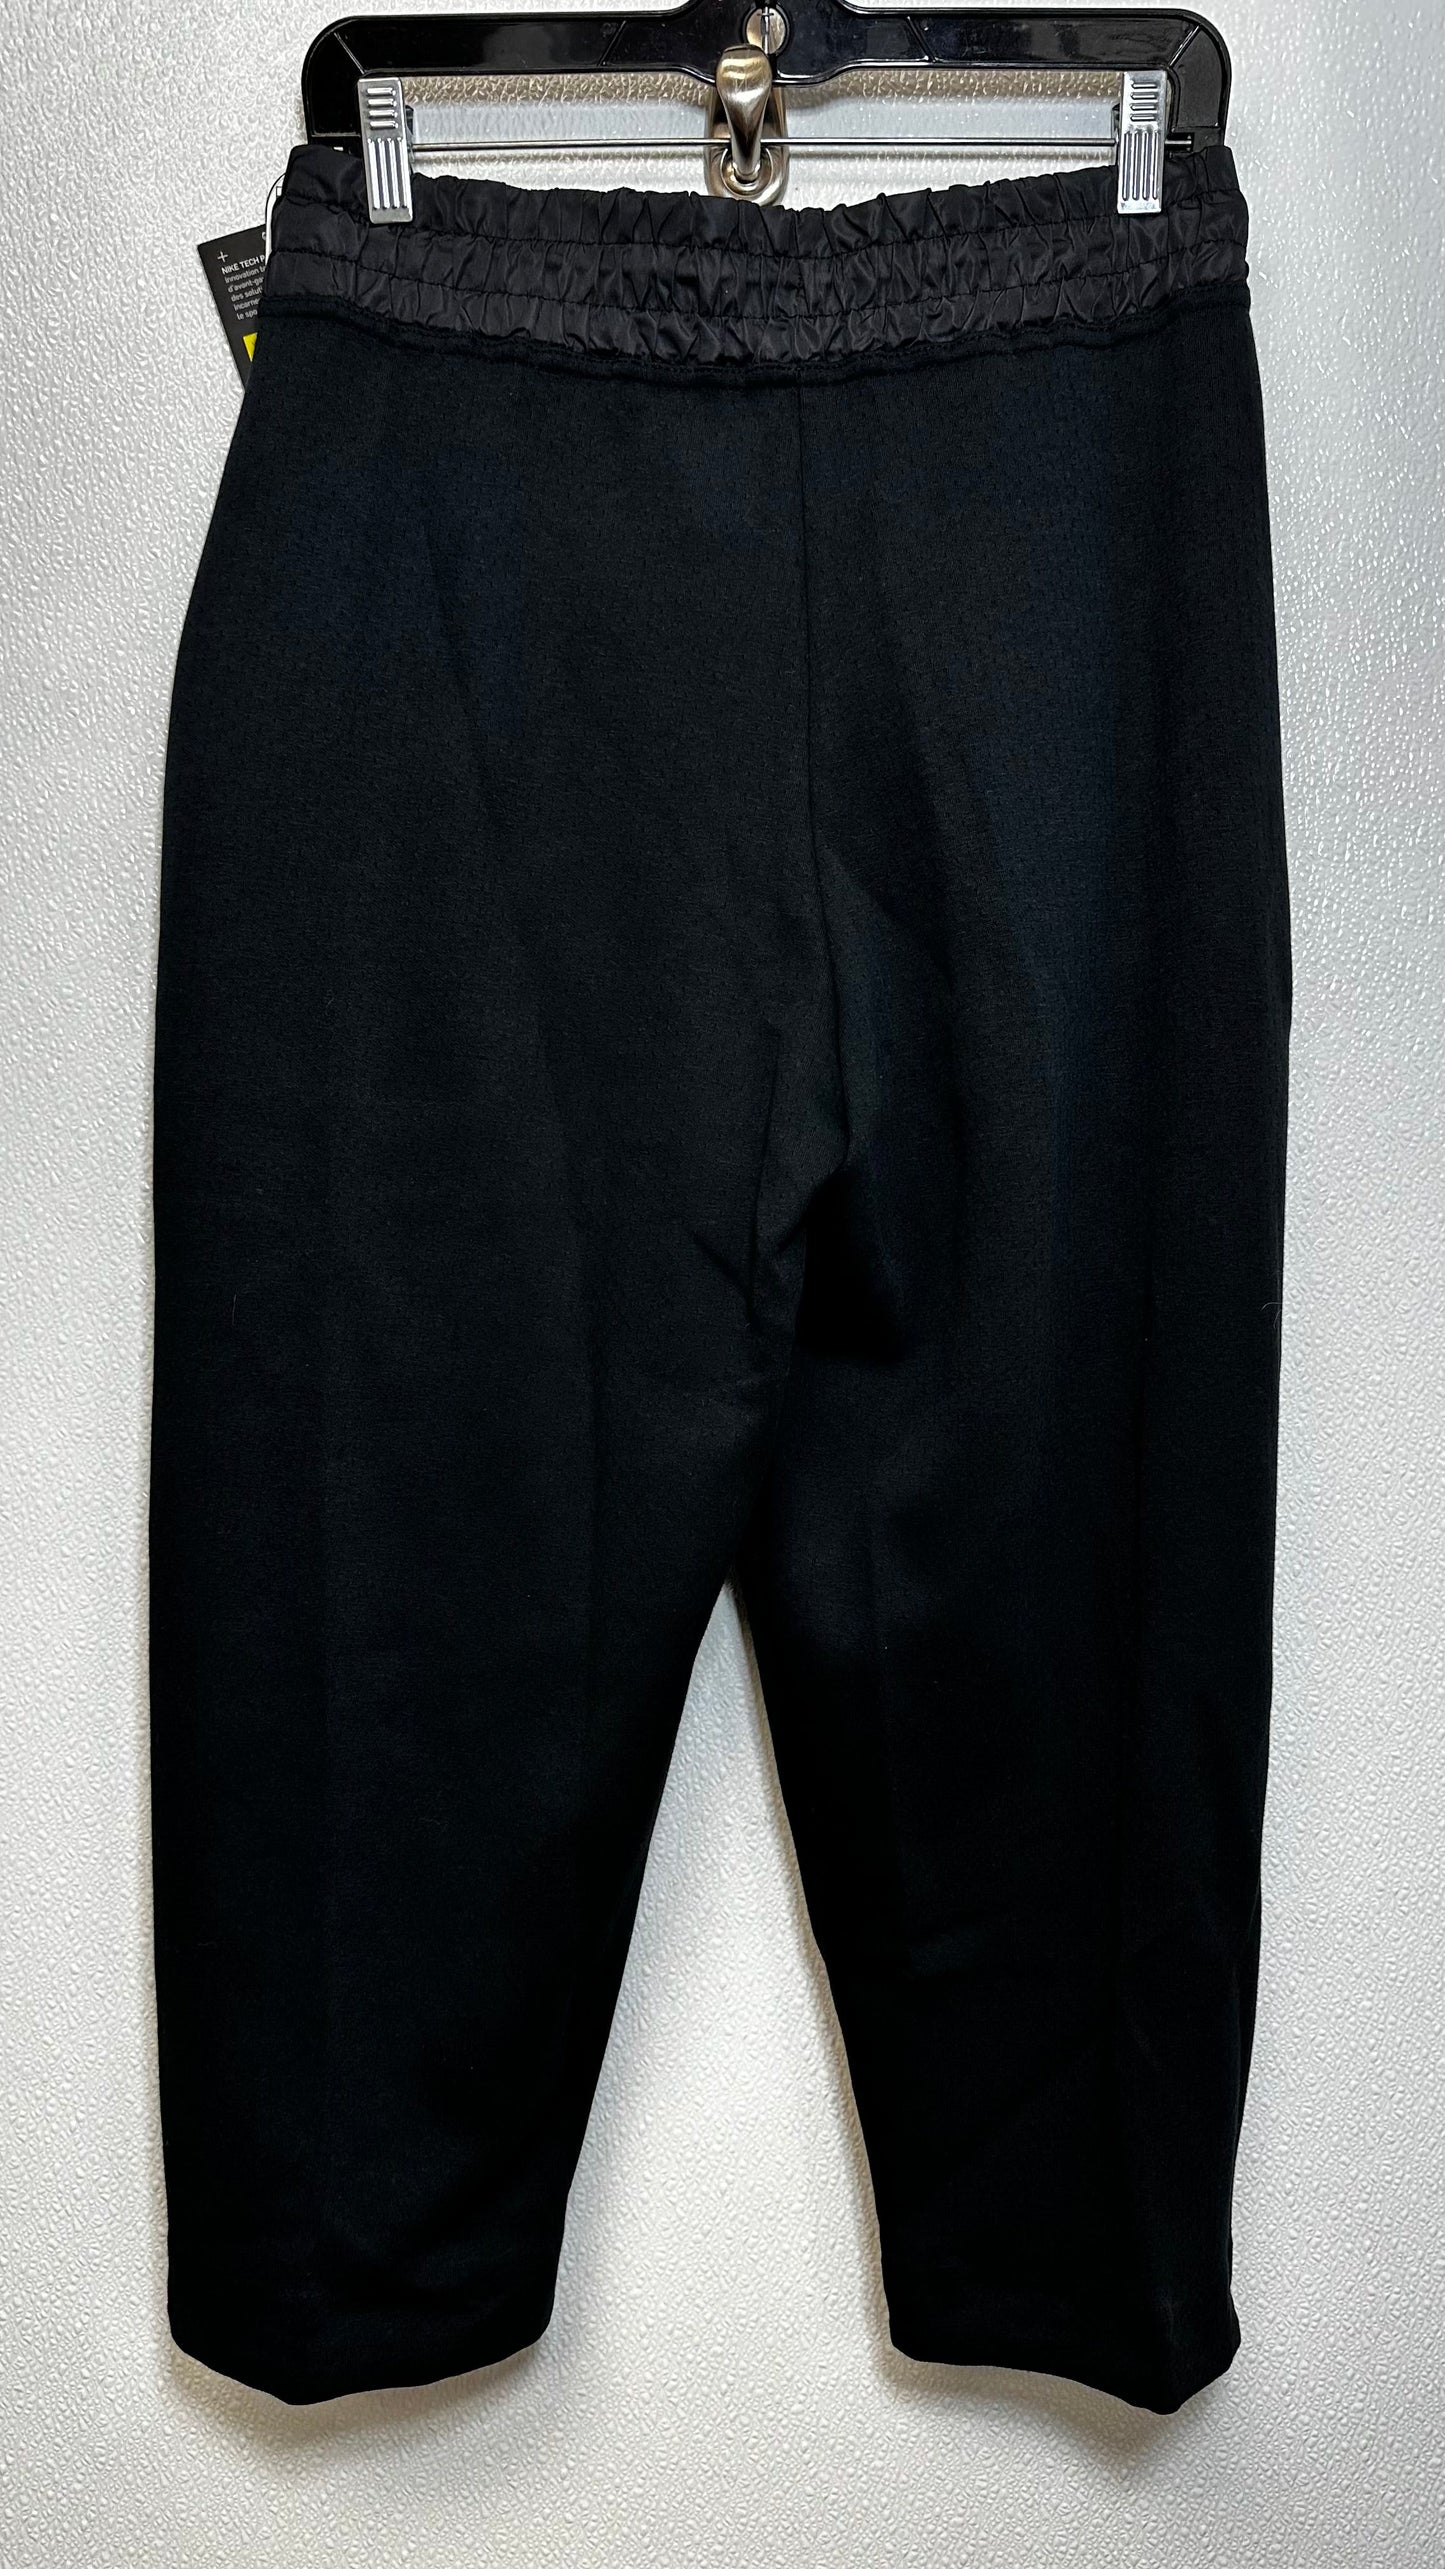 Black Athletic Pants Nike Apparel, Size S